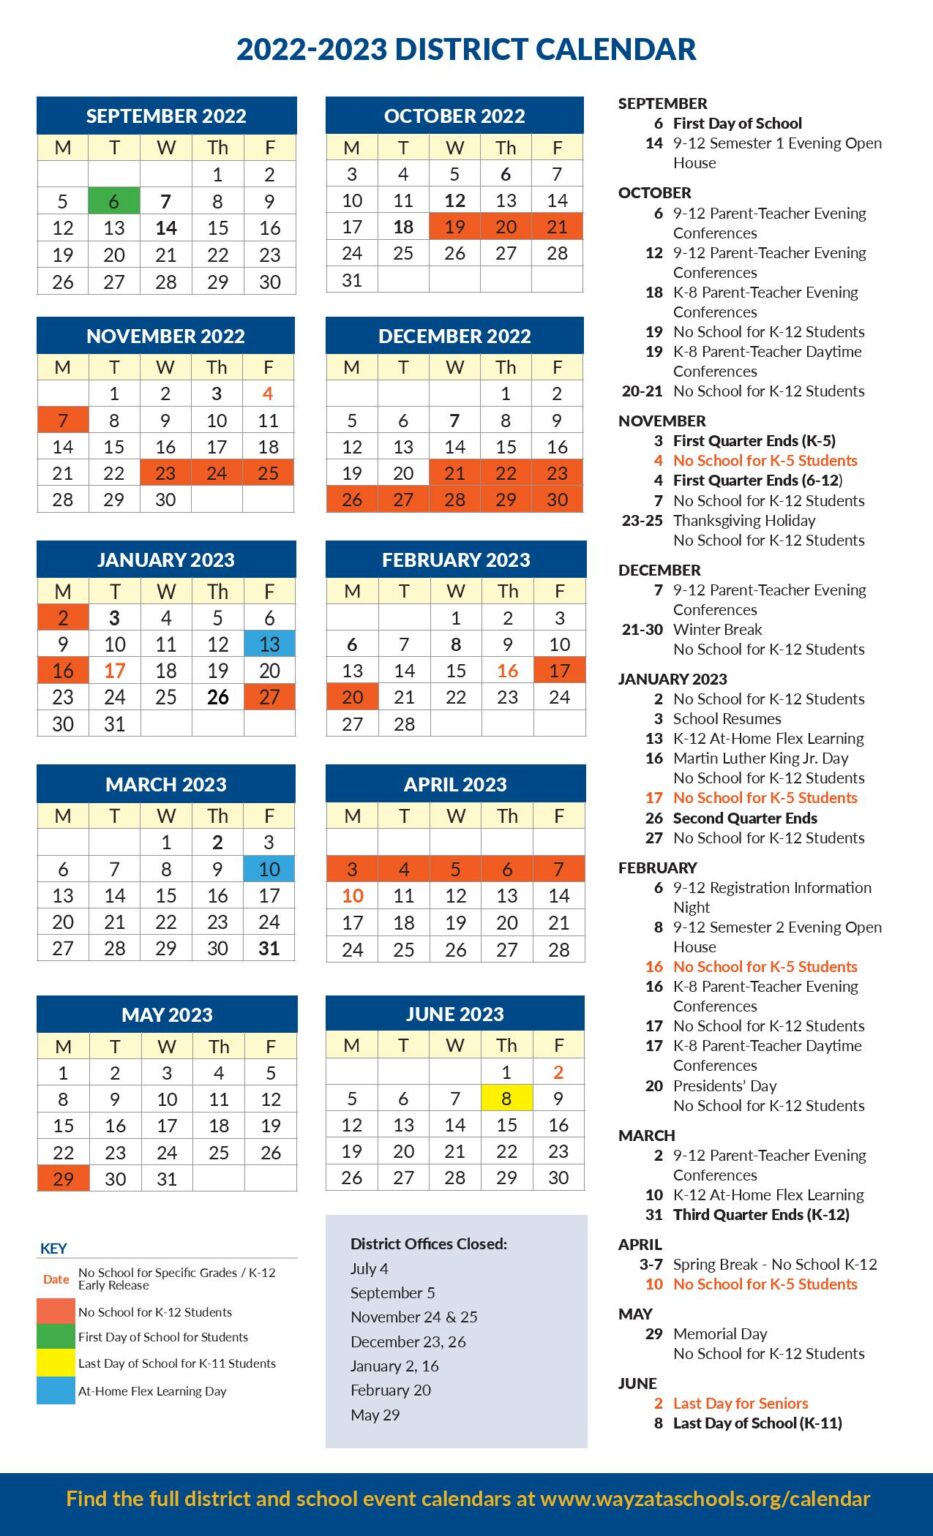 Wayzata Public Schools Calendar 20222023 in PDF